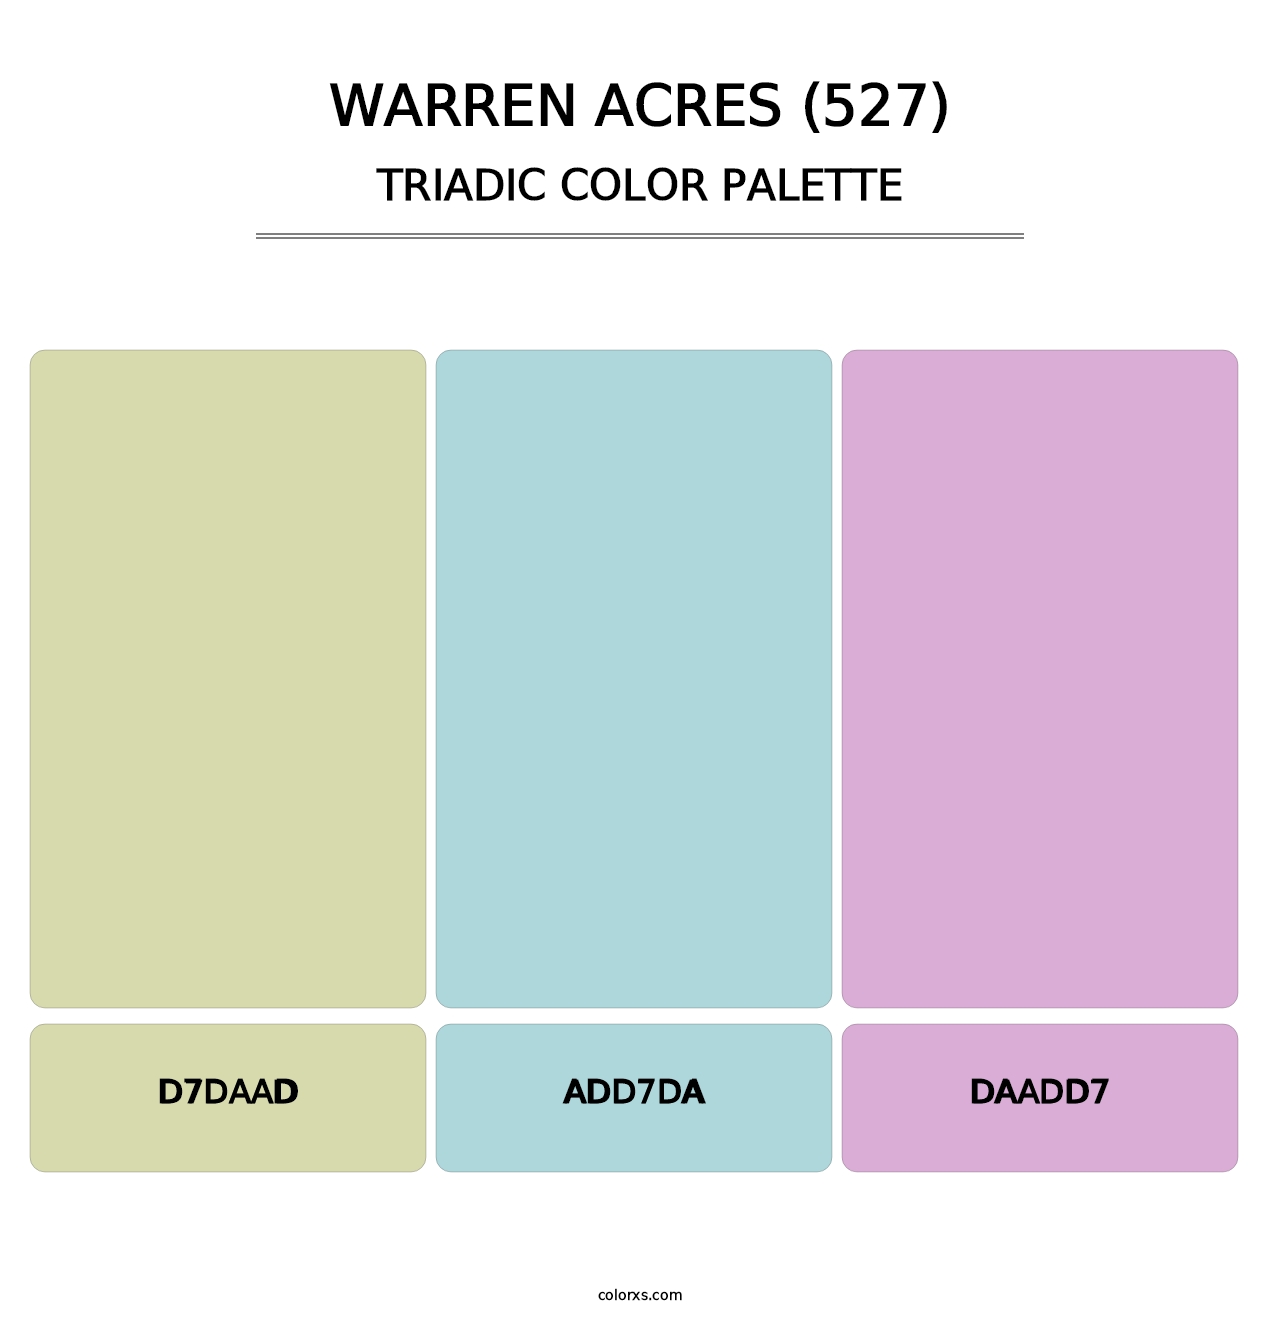 Warren Acres (527) - Triadic Color Palette